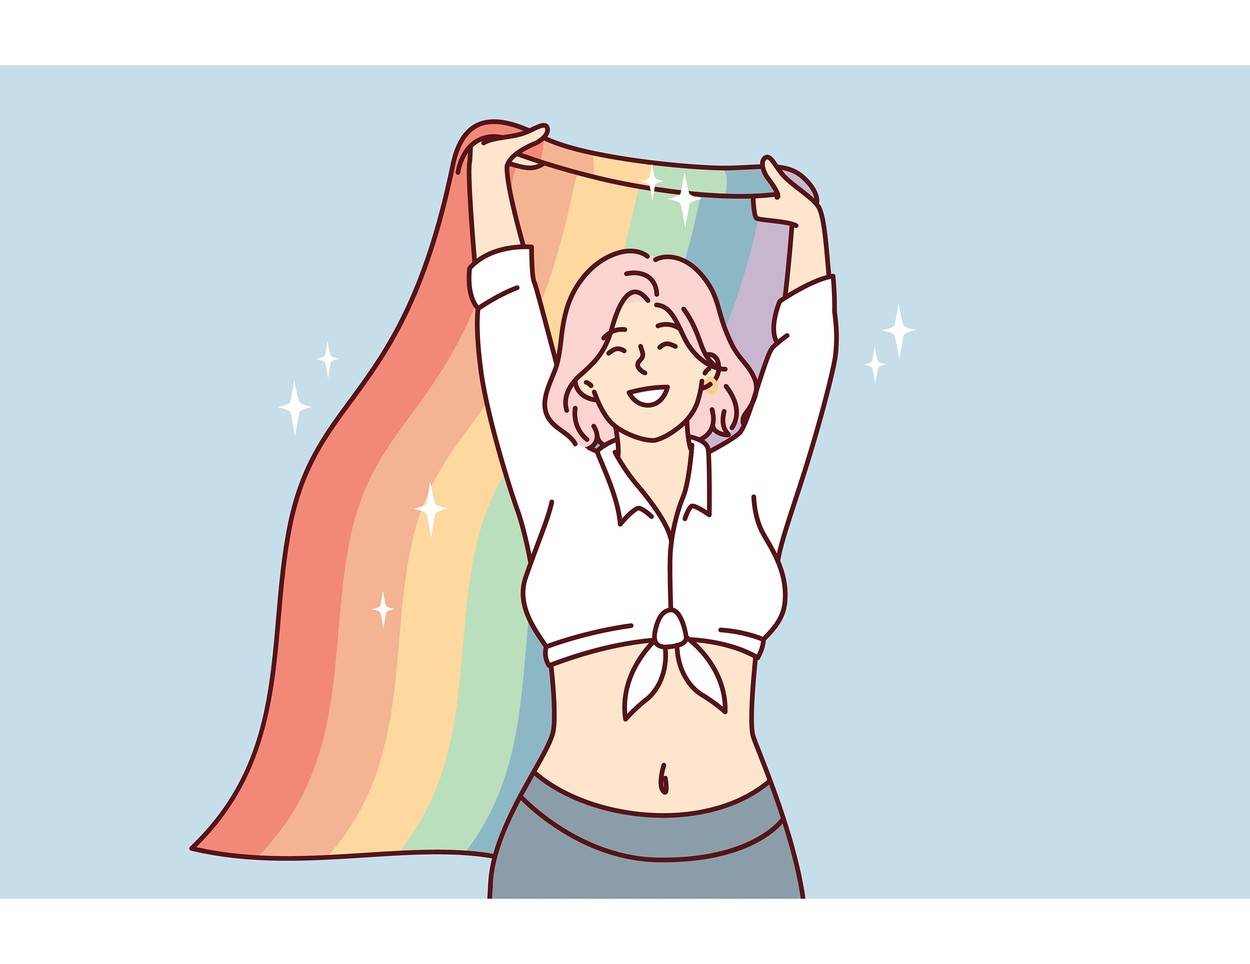  LGBTQ+ zastava.jpg 